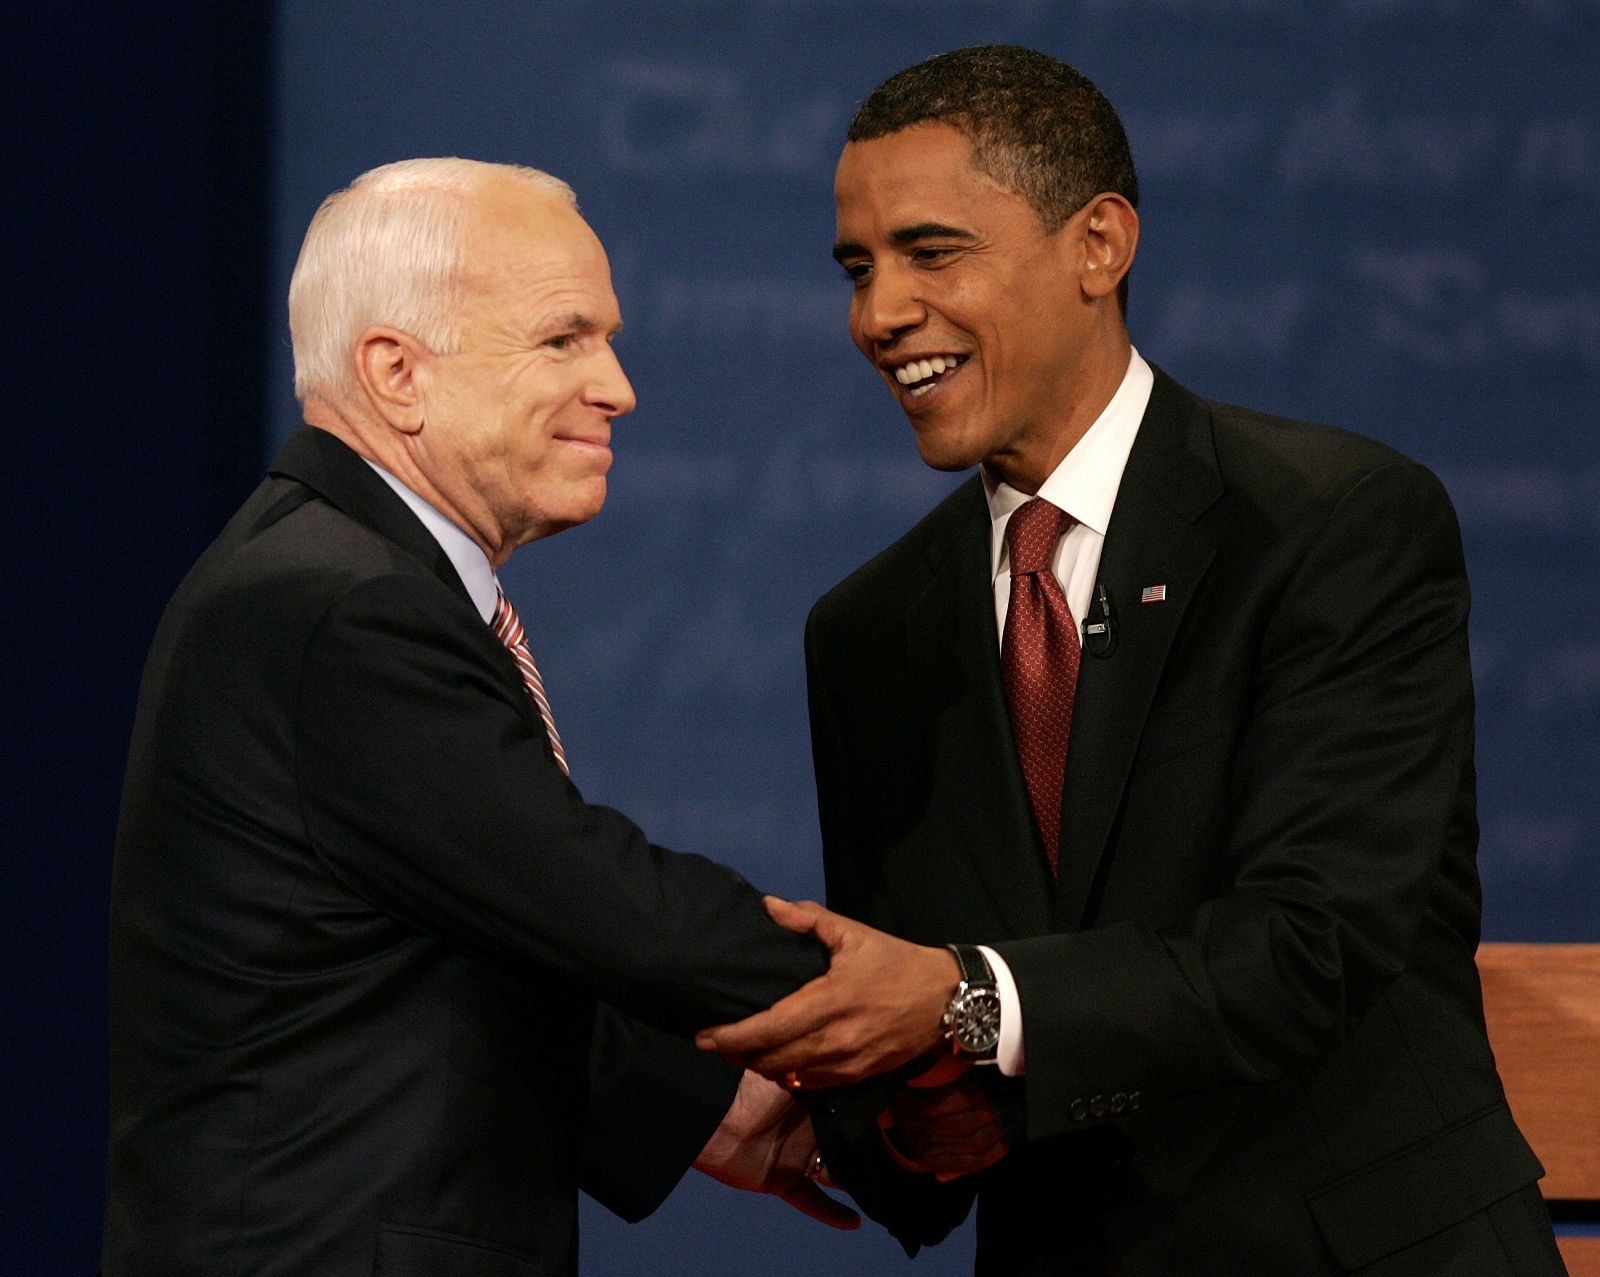 Senator John McCain and Senator Barack Obama shake hands at start of first U.S. Presidential Debate in Oxford, Mississippi